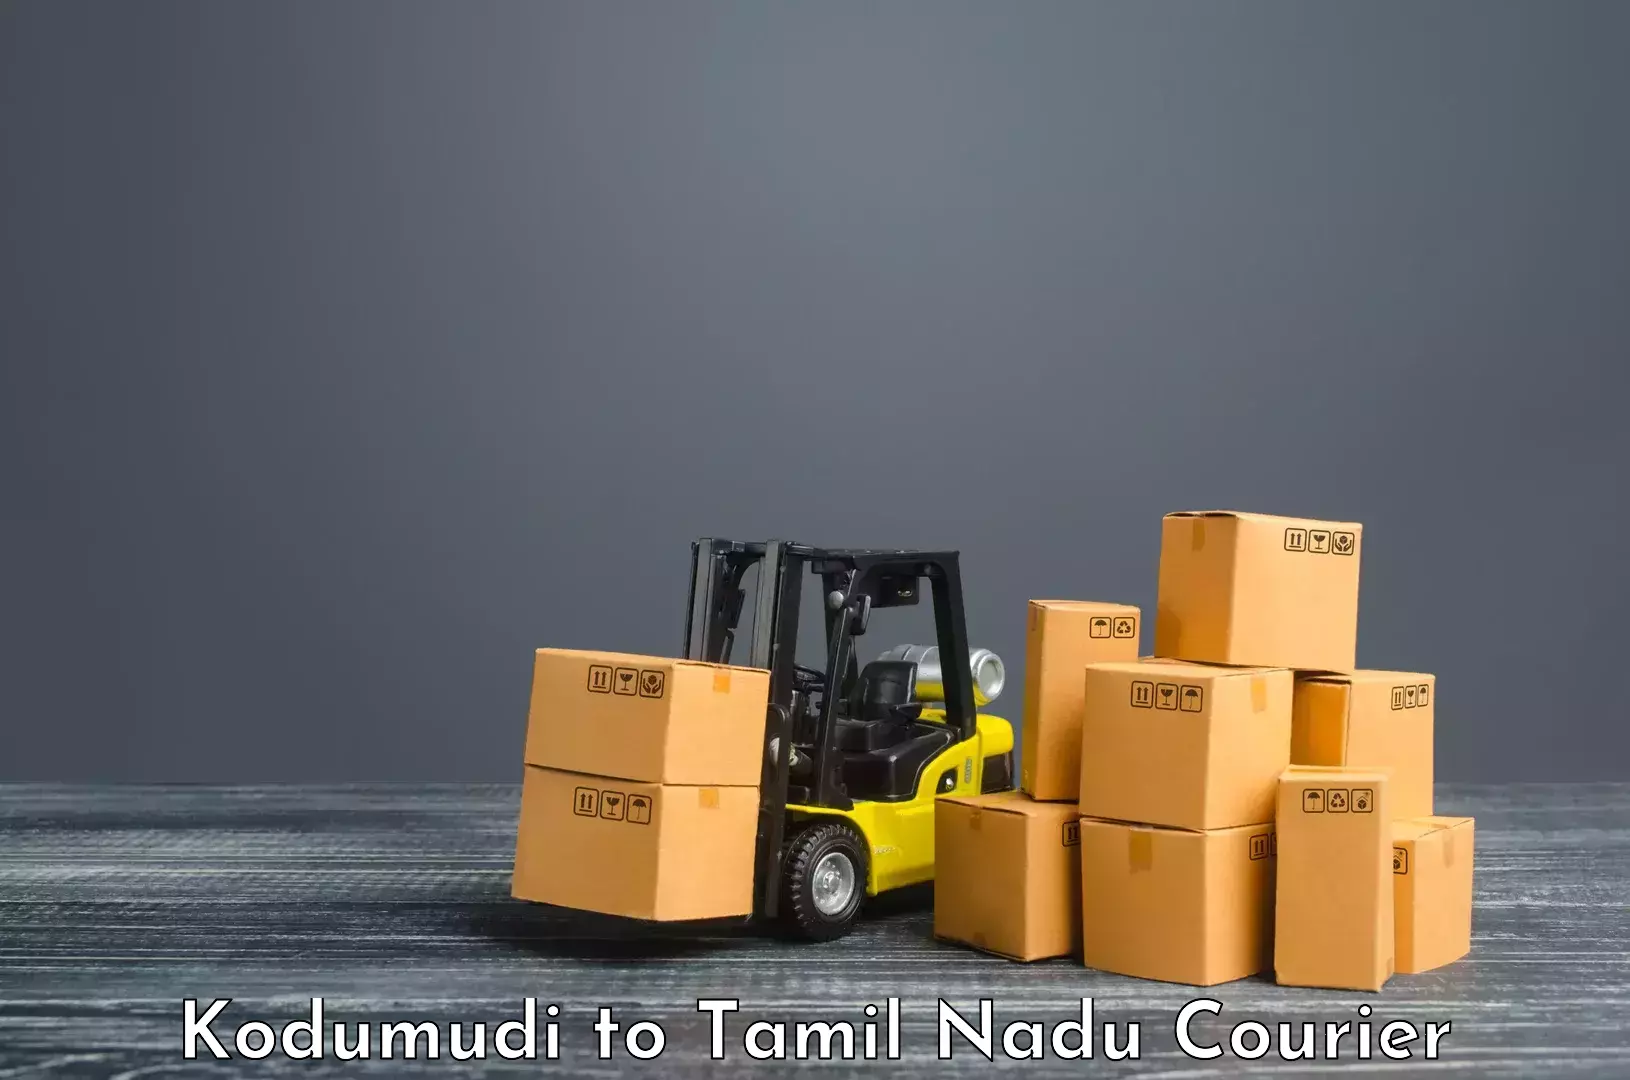 Specialized shipment handling Kodumudi to Tamil Nadu